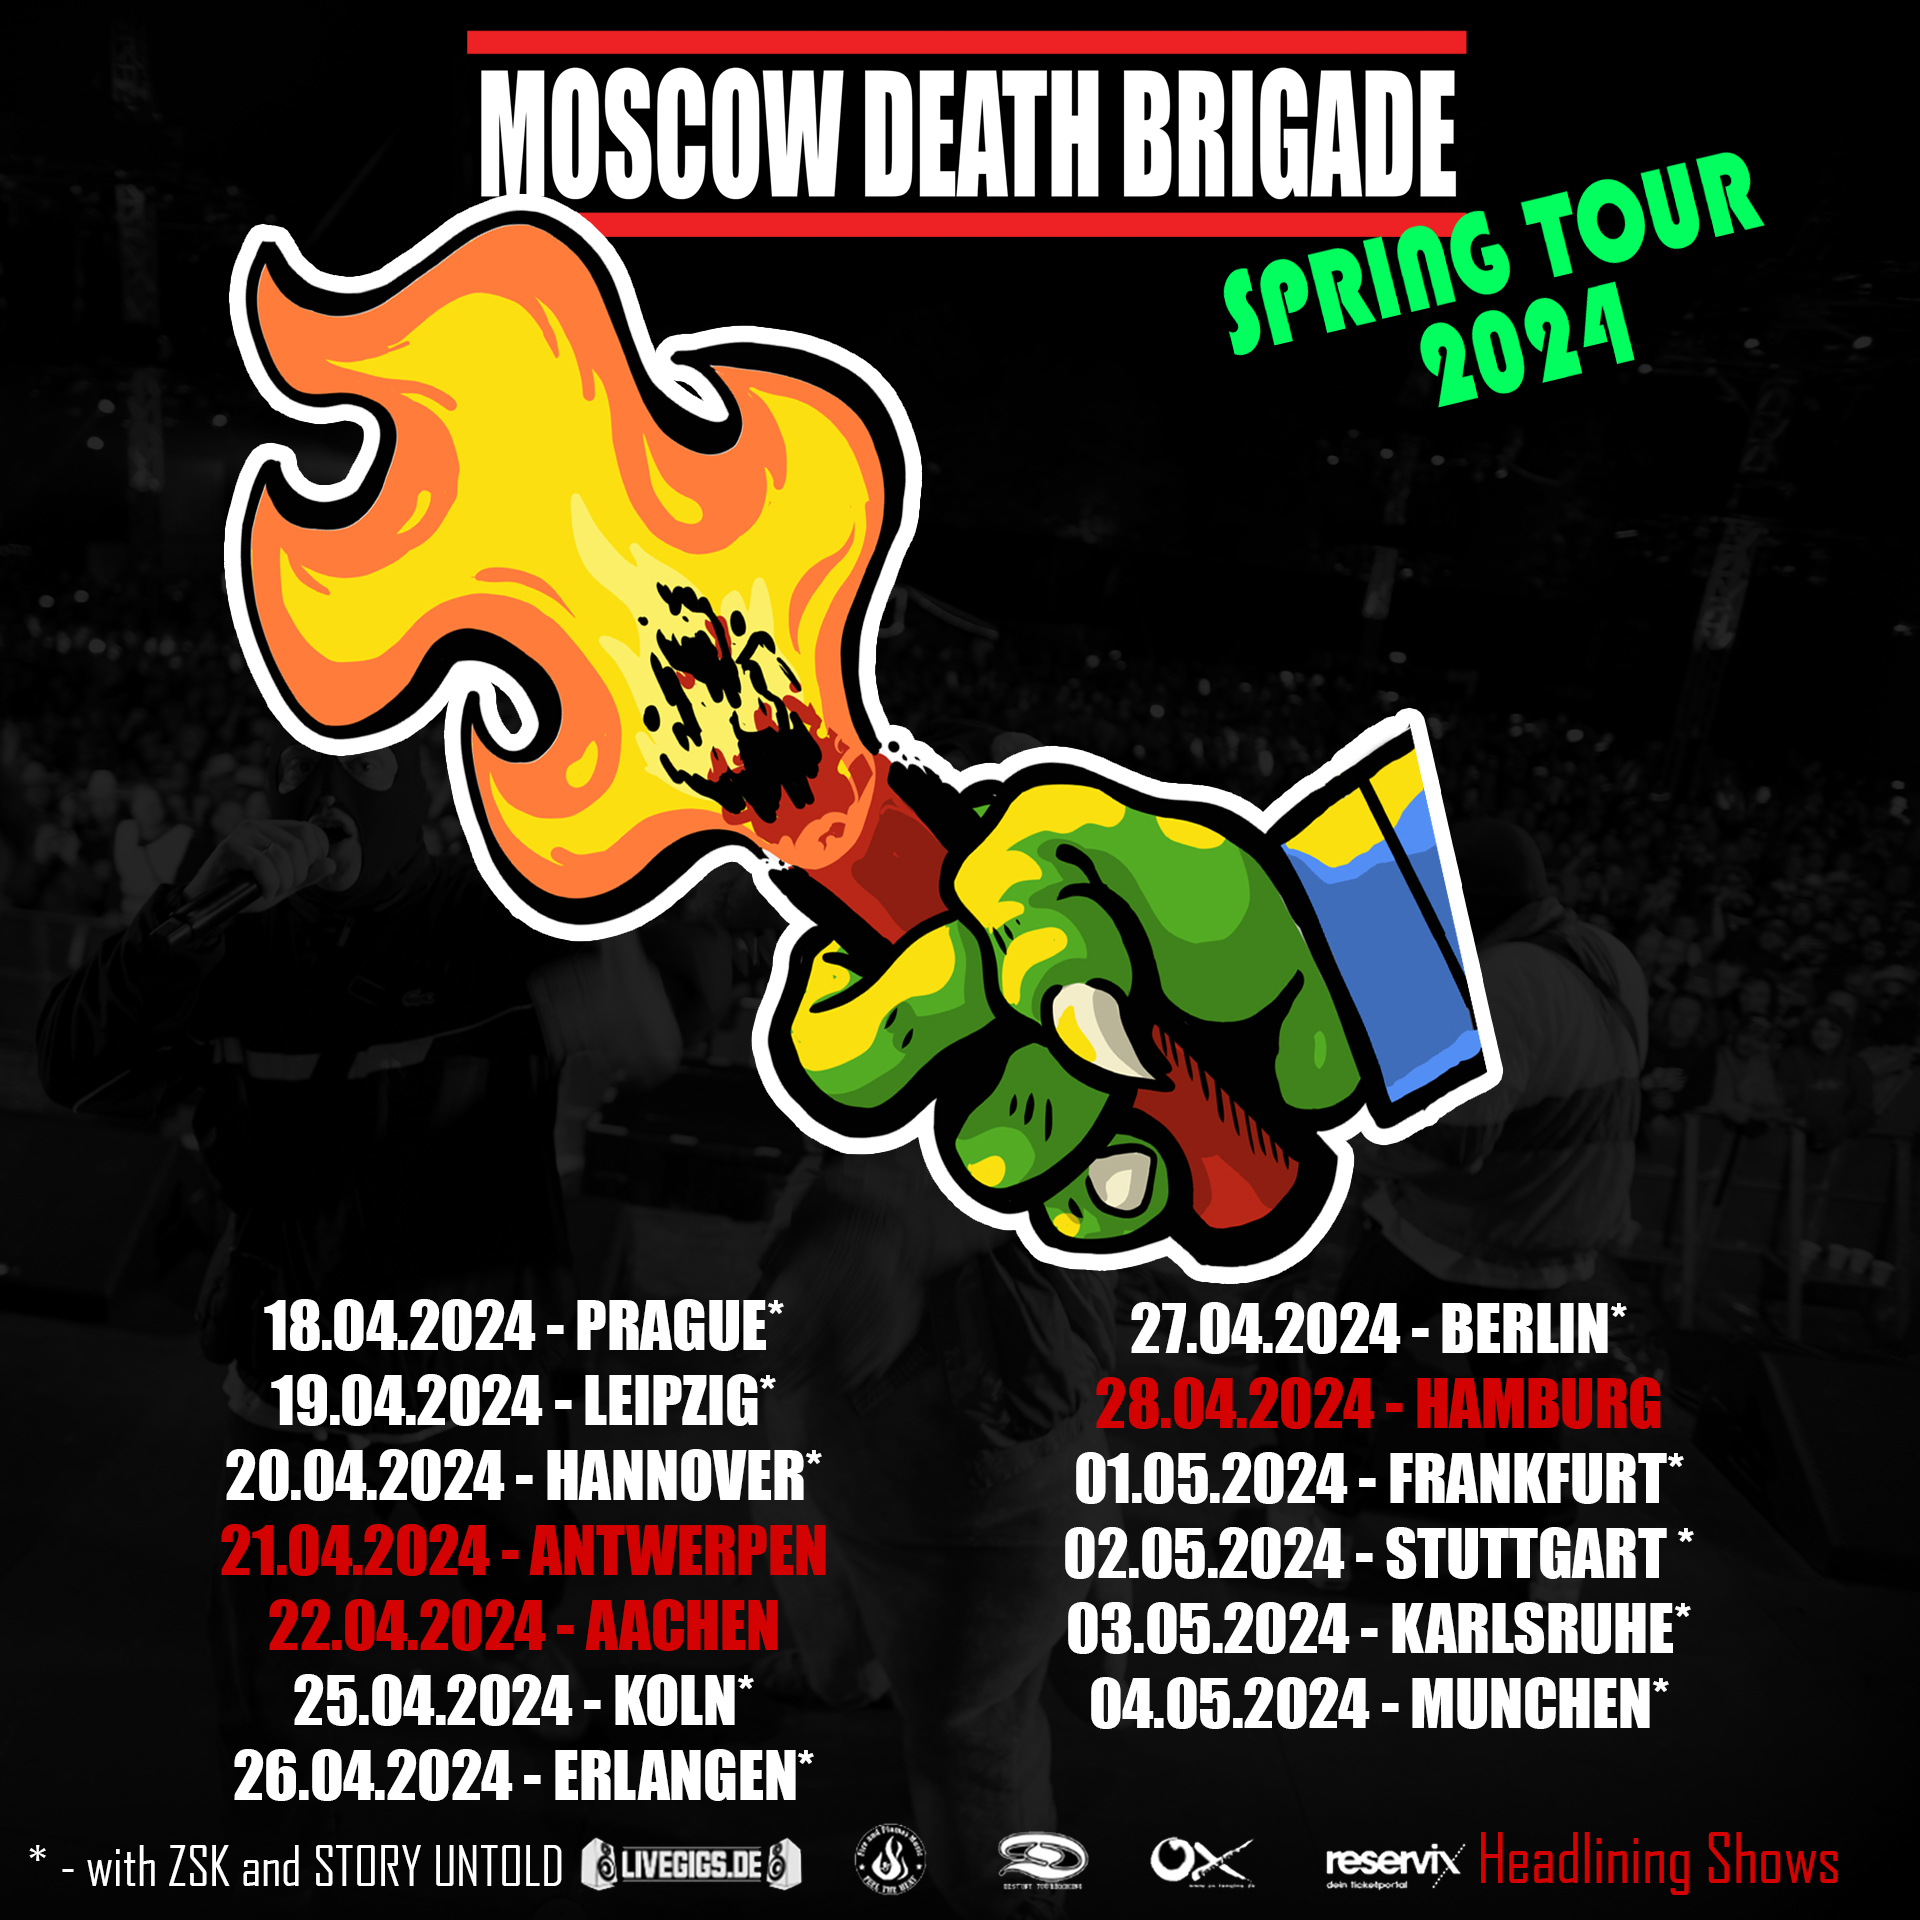 MOSCOW DEATH BRIGADE SPRING TOUR 2024